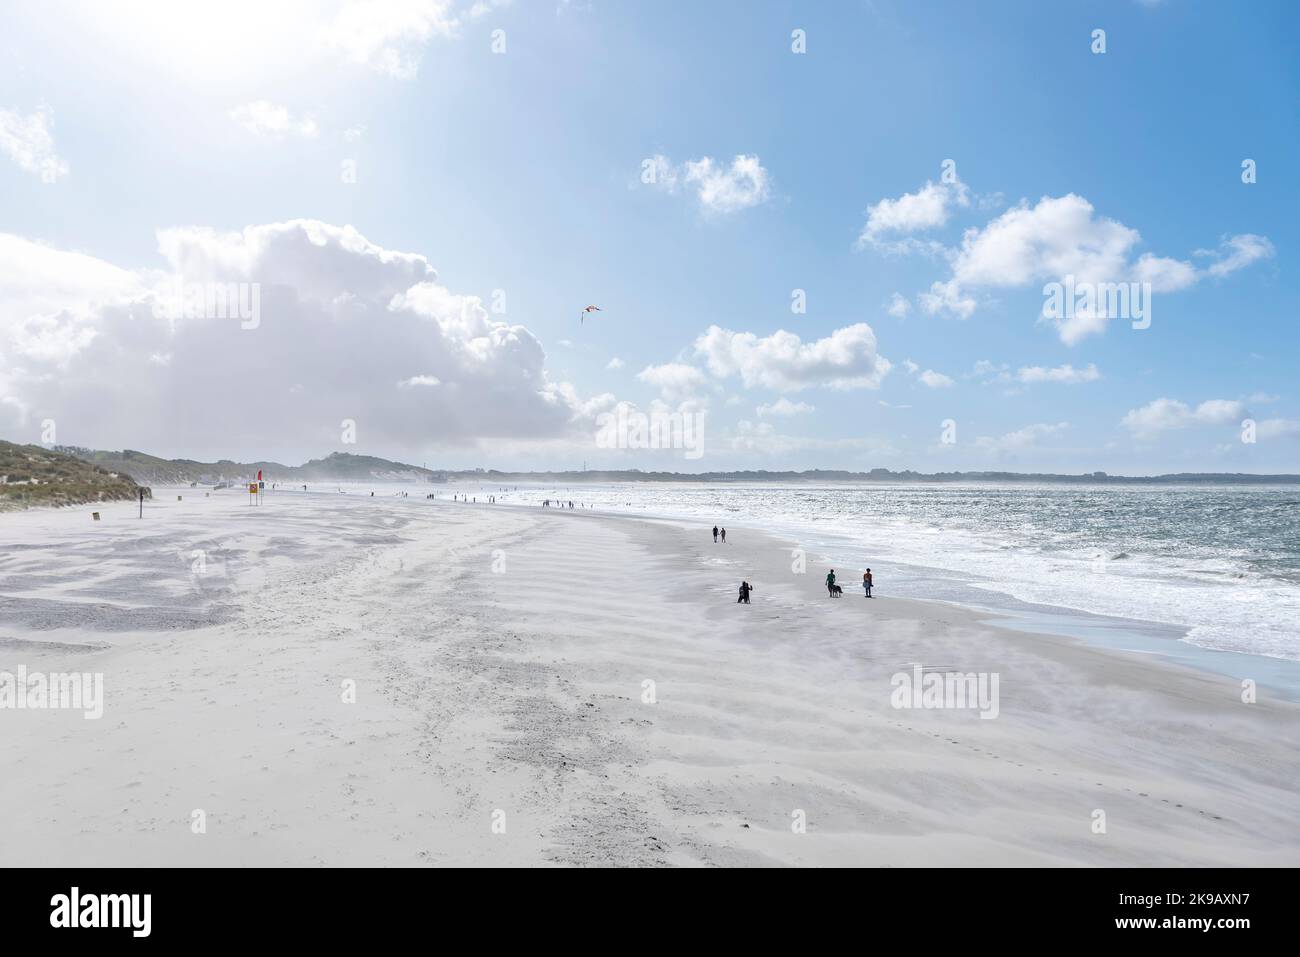 Landscape with view over Banjaard beach, Kamperland, Zeeland, Netherlands, Europe Stock Photo